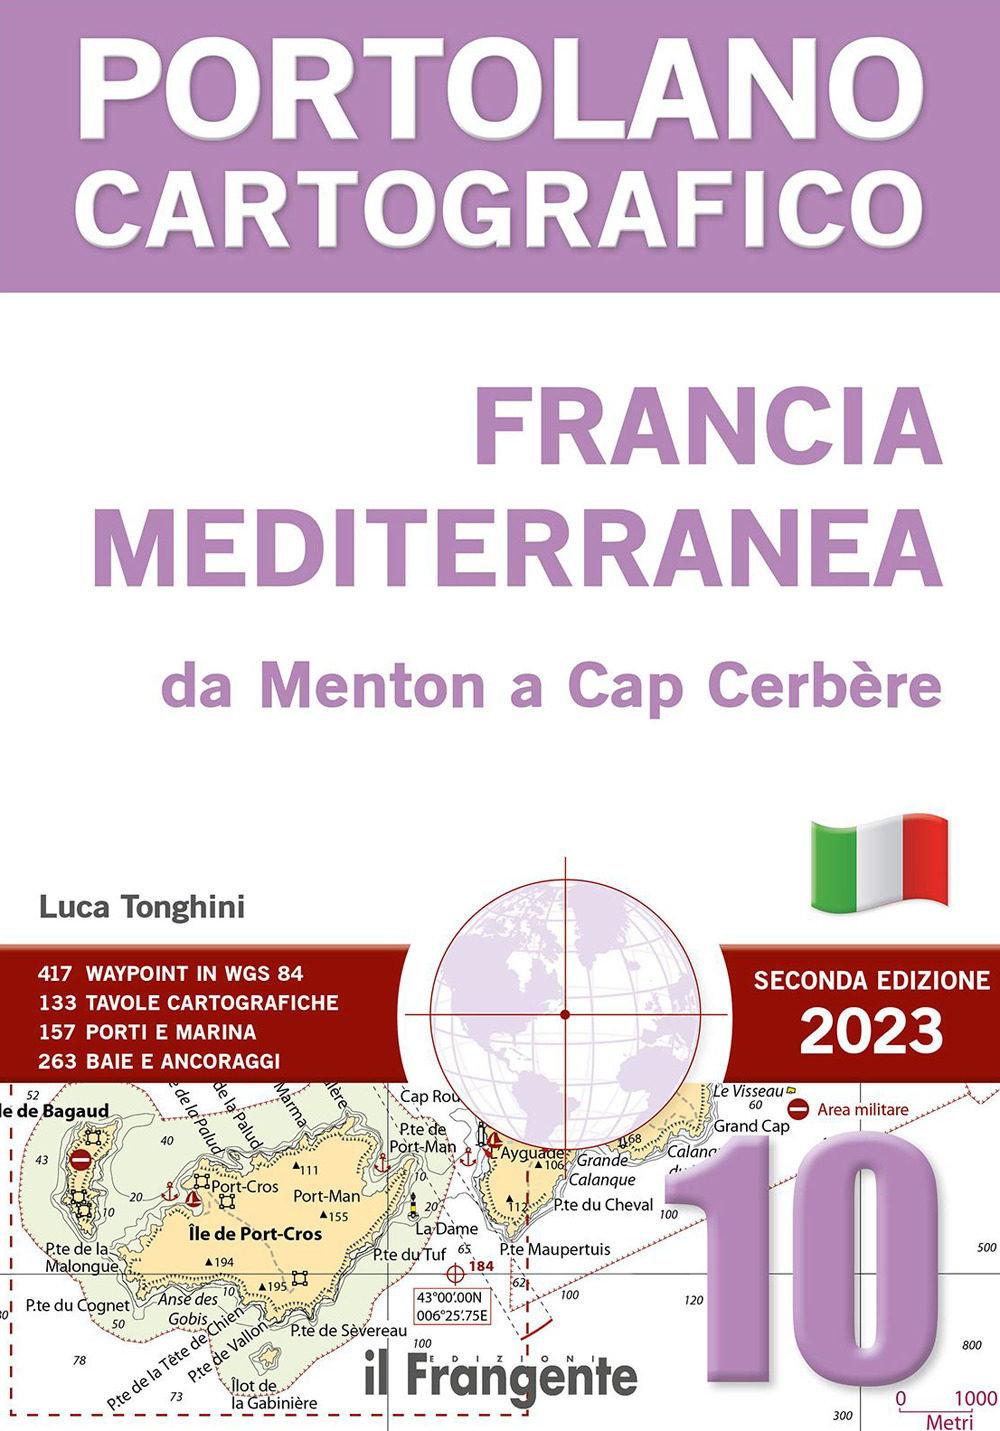 Francia mediterranea da Menton a Cap Cerbèrea. P10 Portolano cartografico